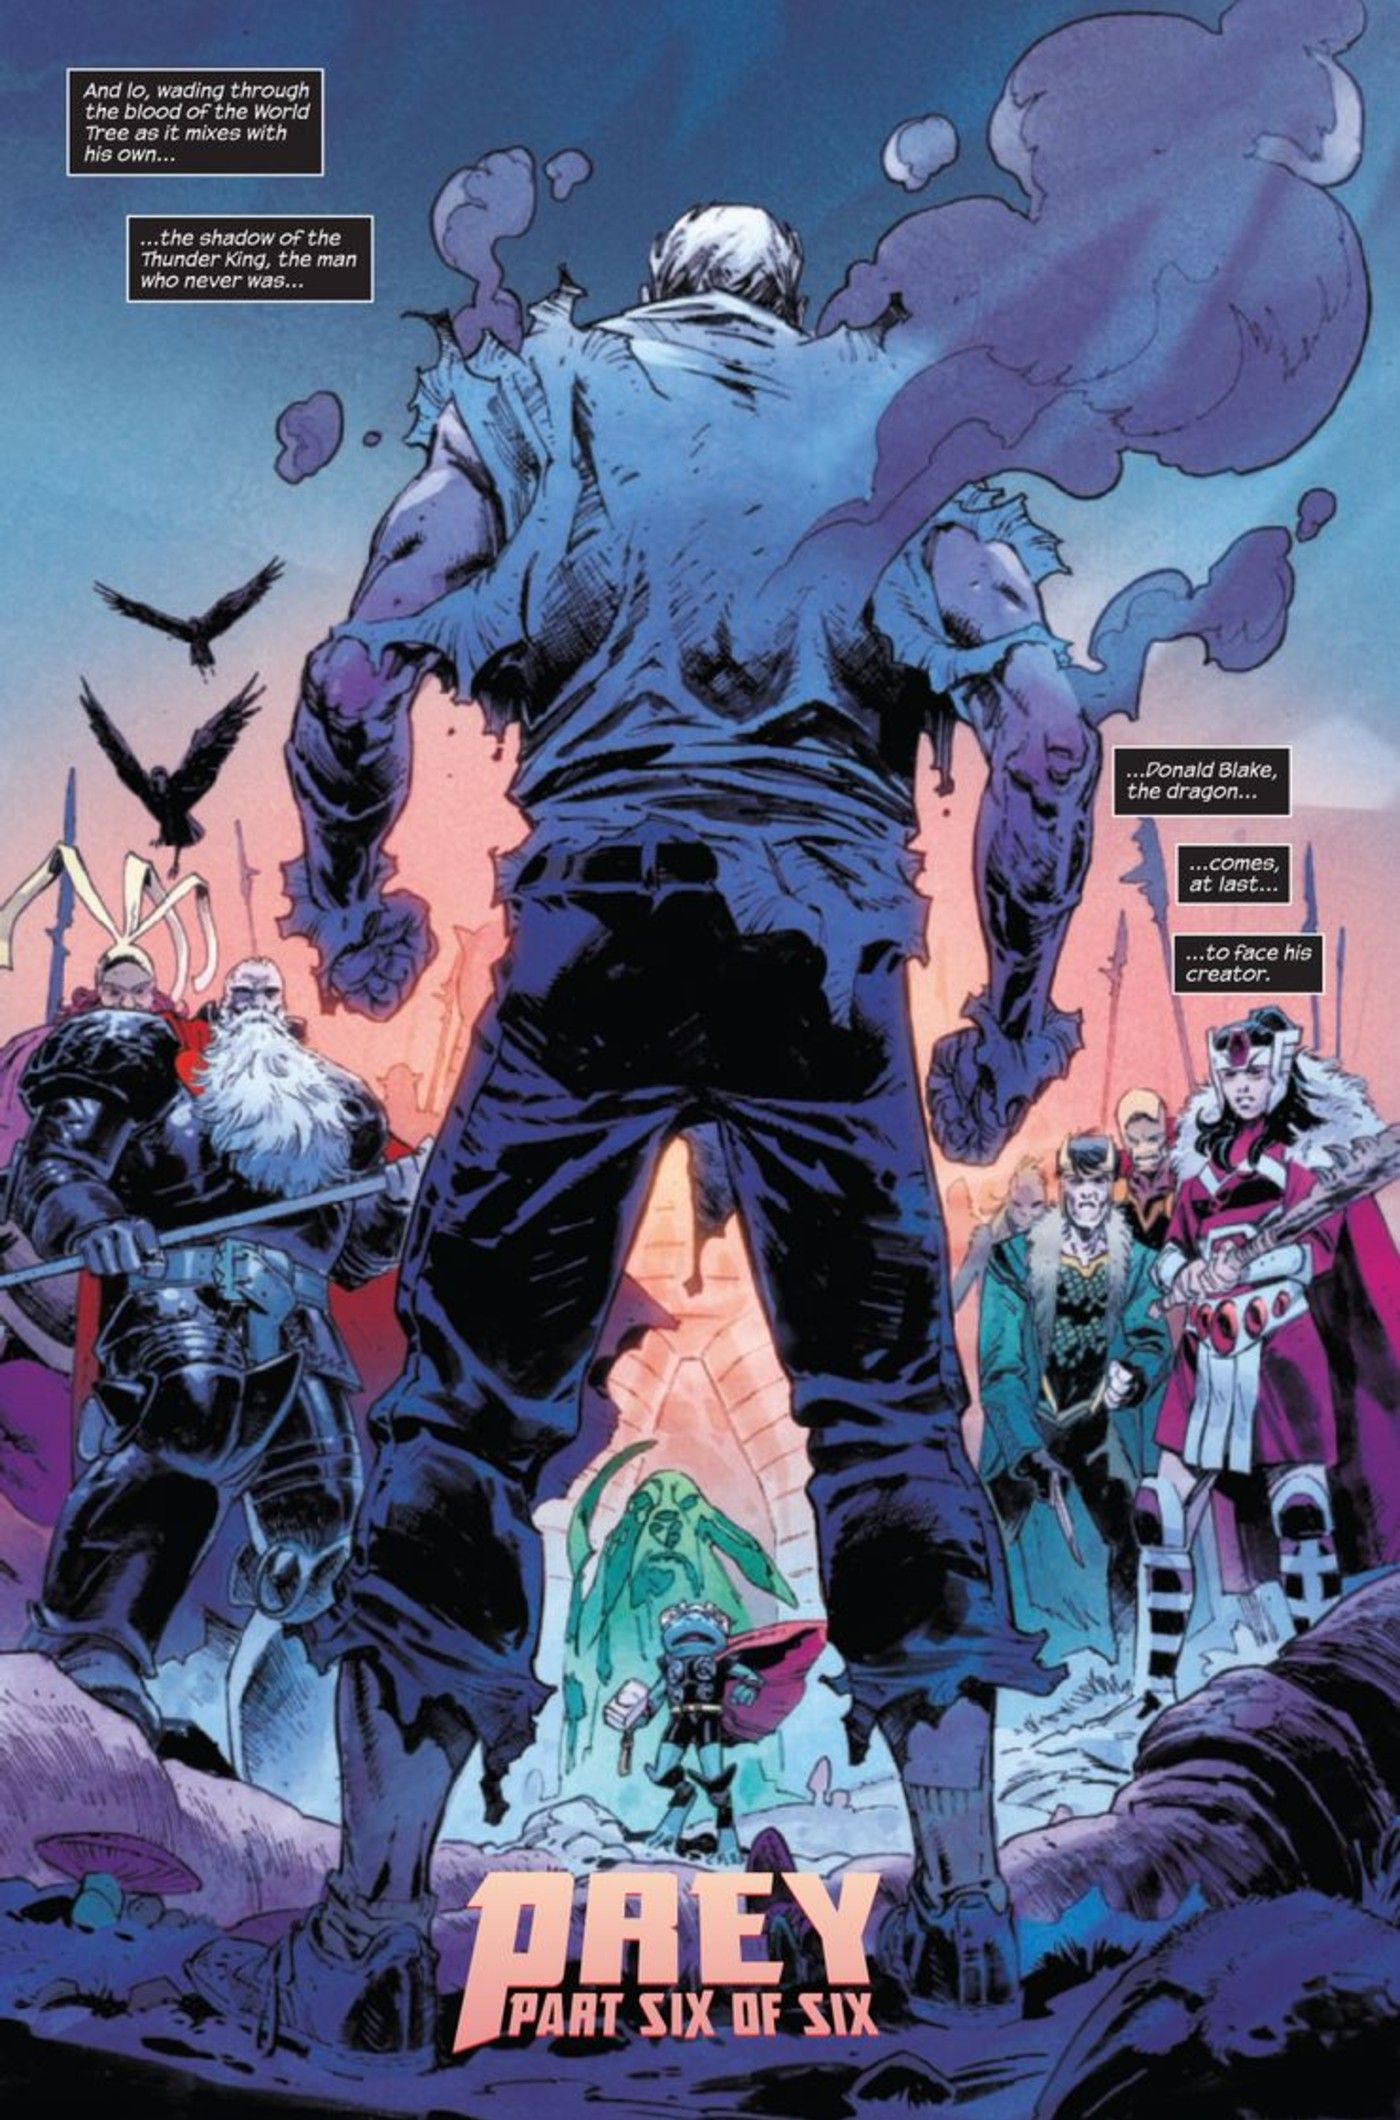 Thors Most Epic Moment is Reversed in Comic Sneak Peek